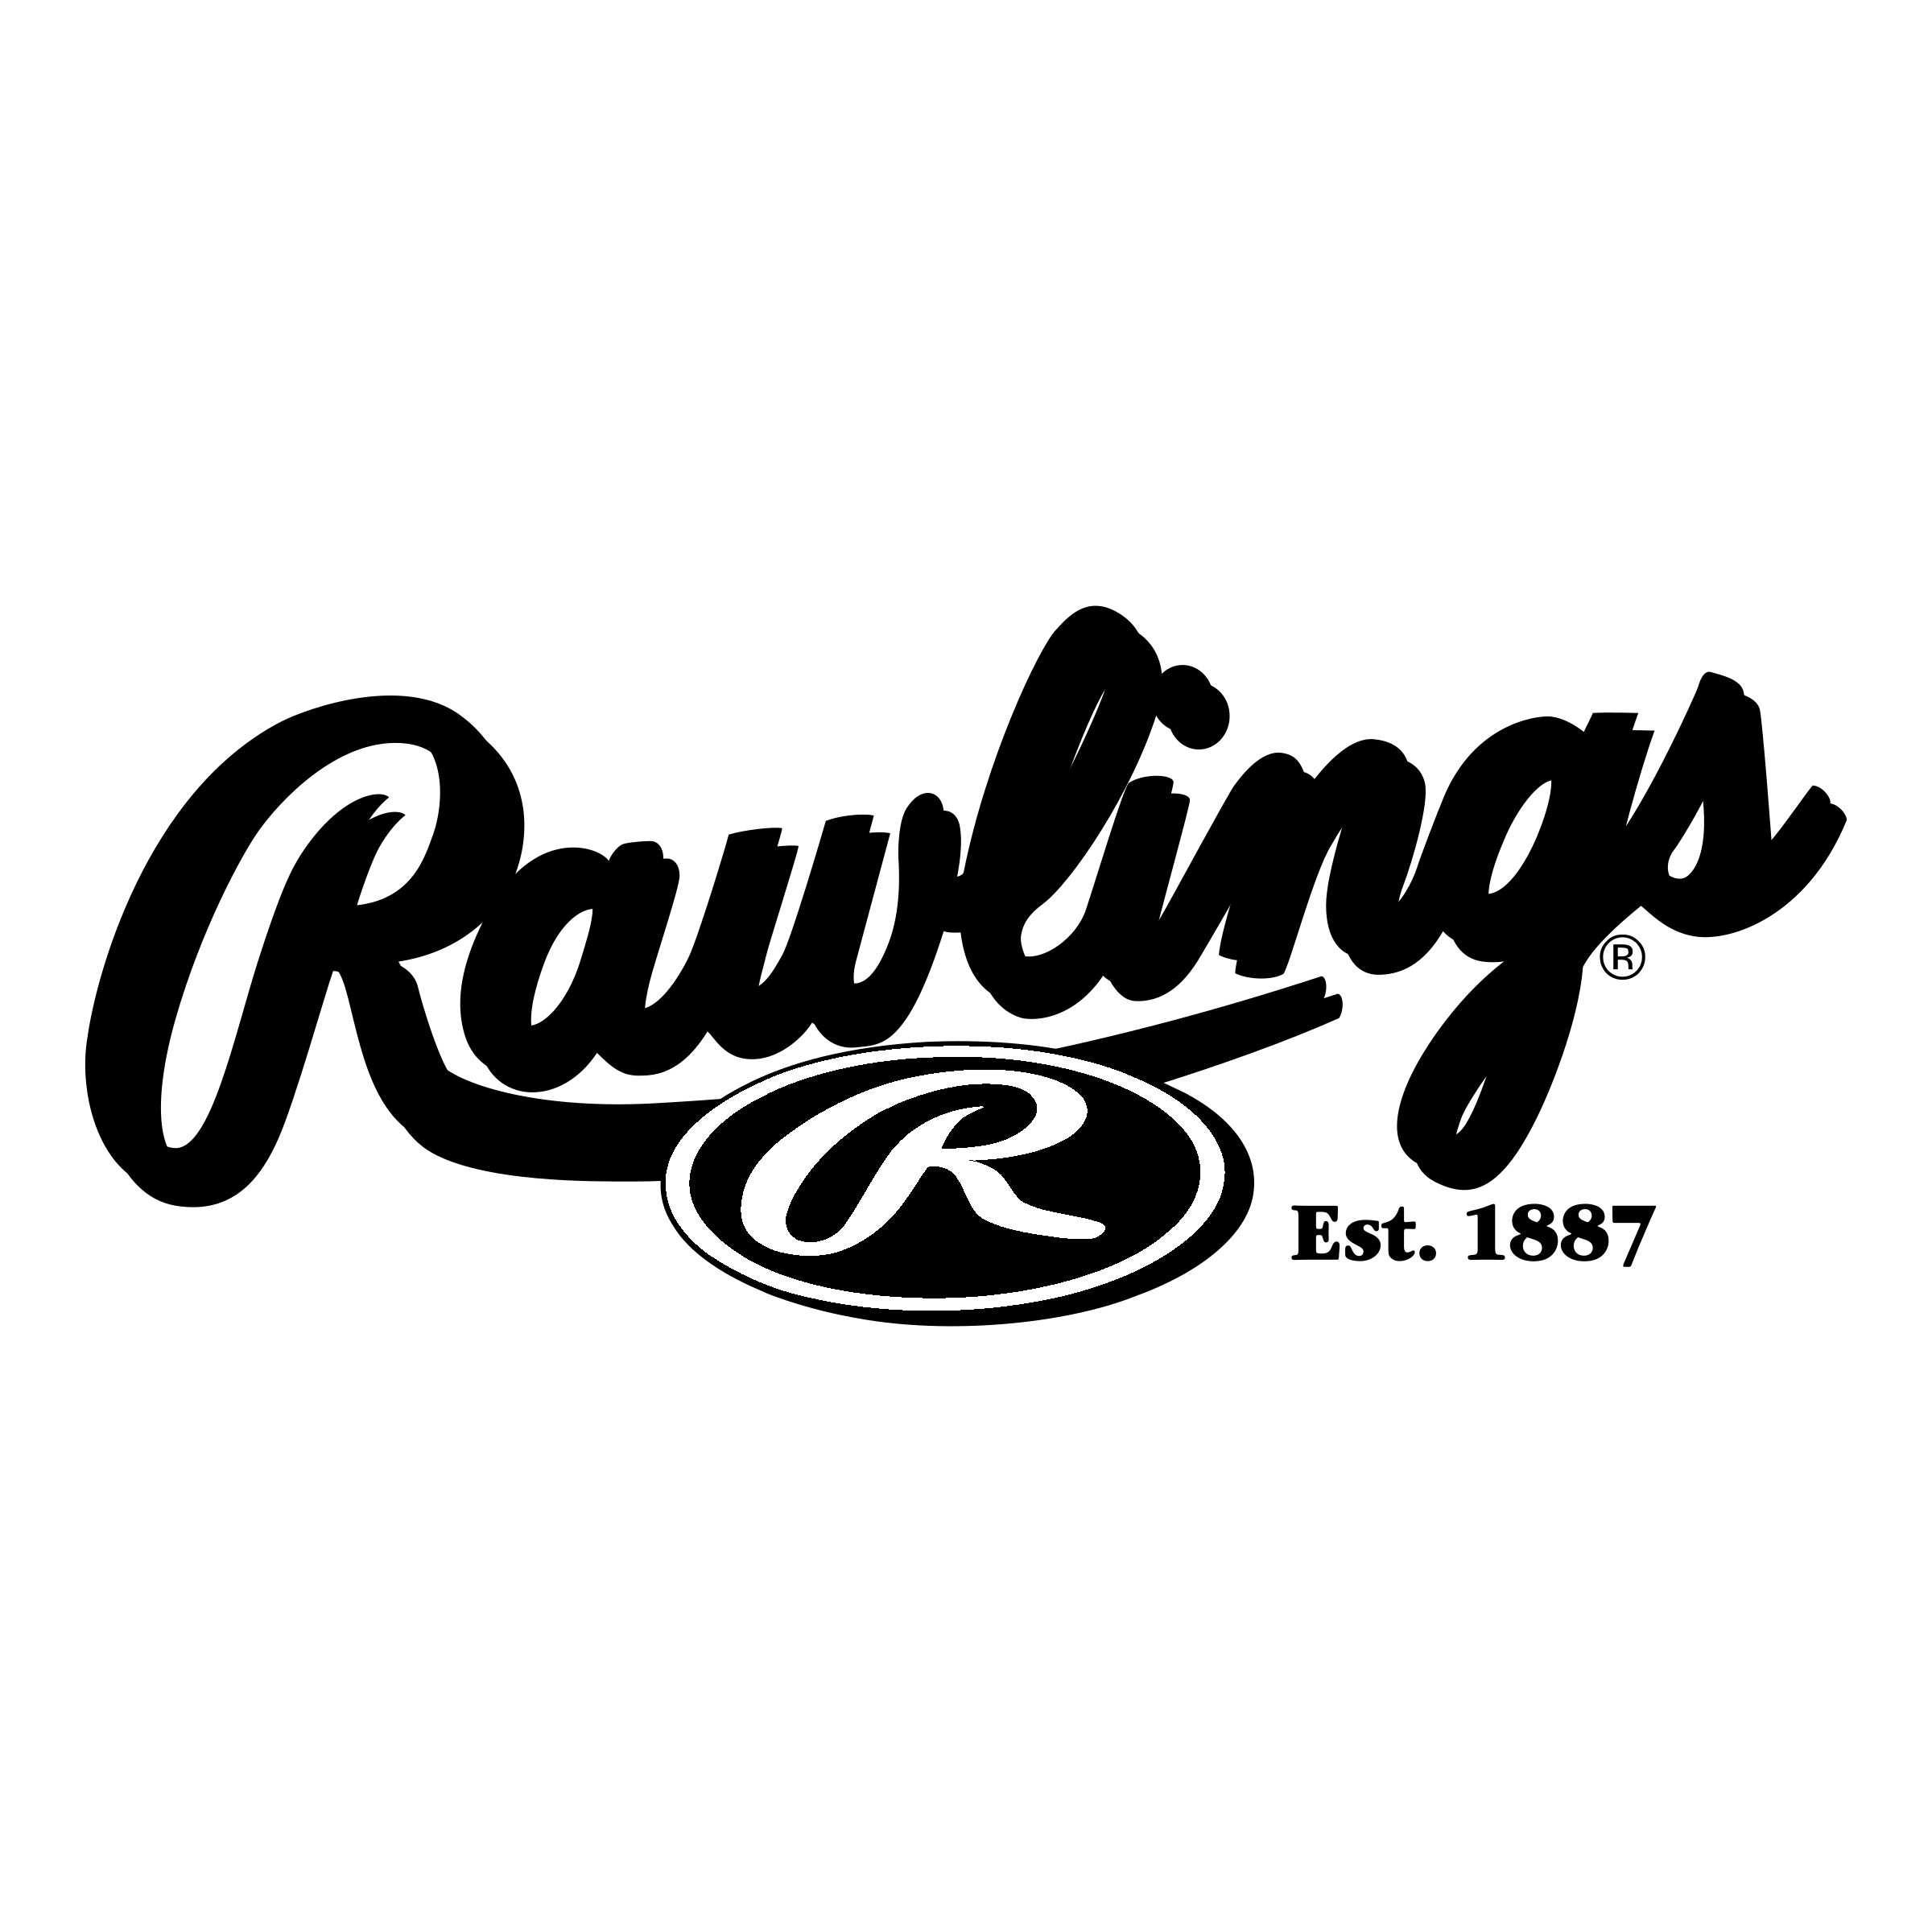 Rawlings Logo - Rawlings Logo PNG Transparent & SVG Vector